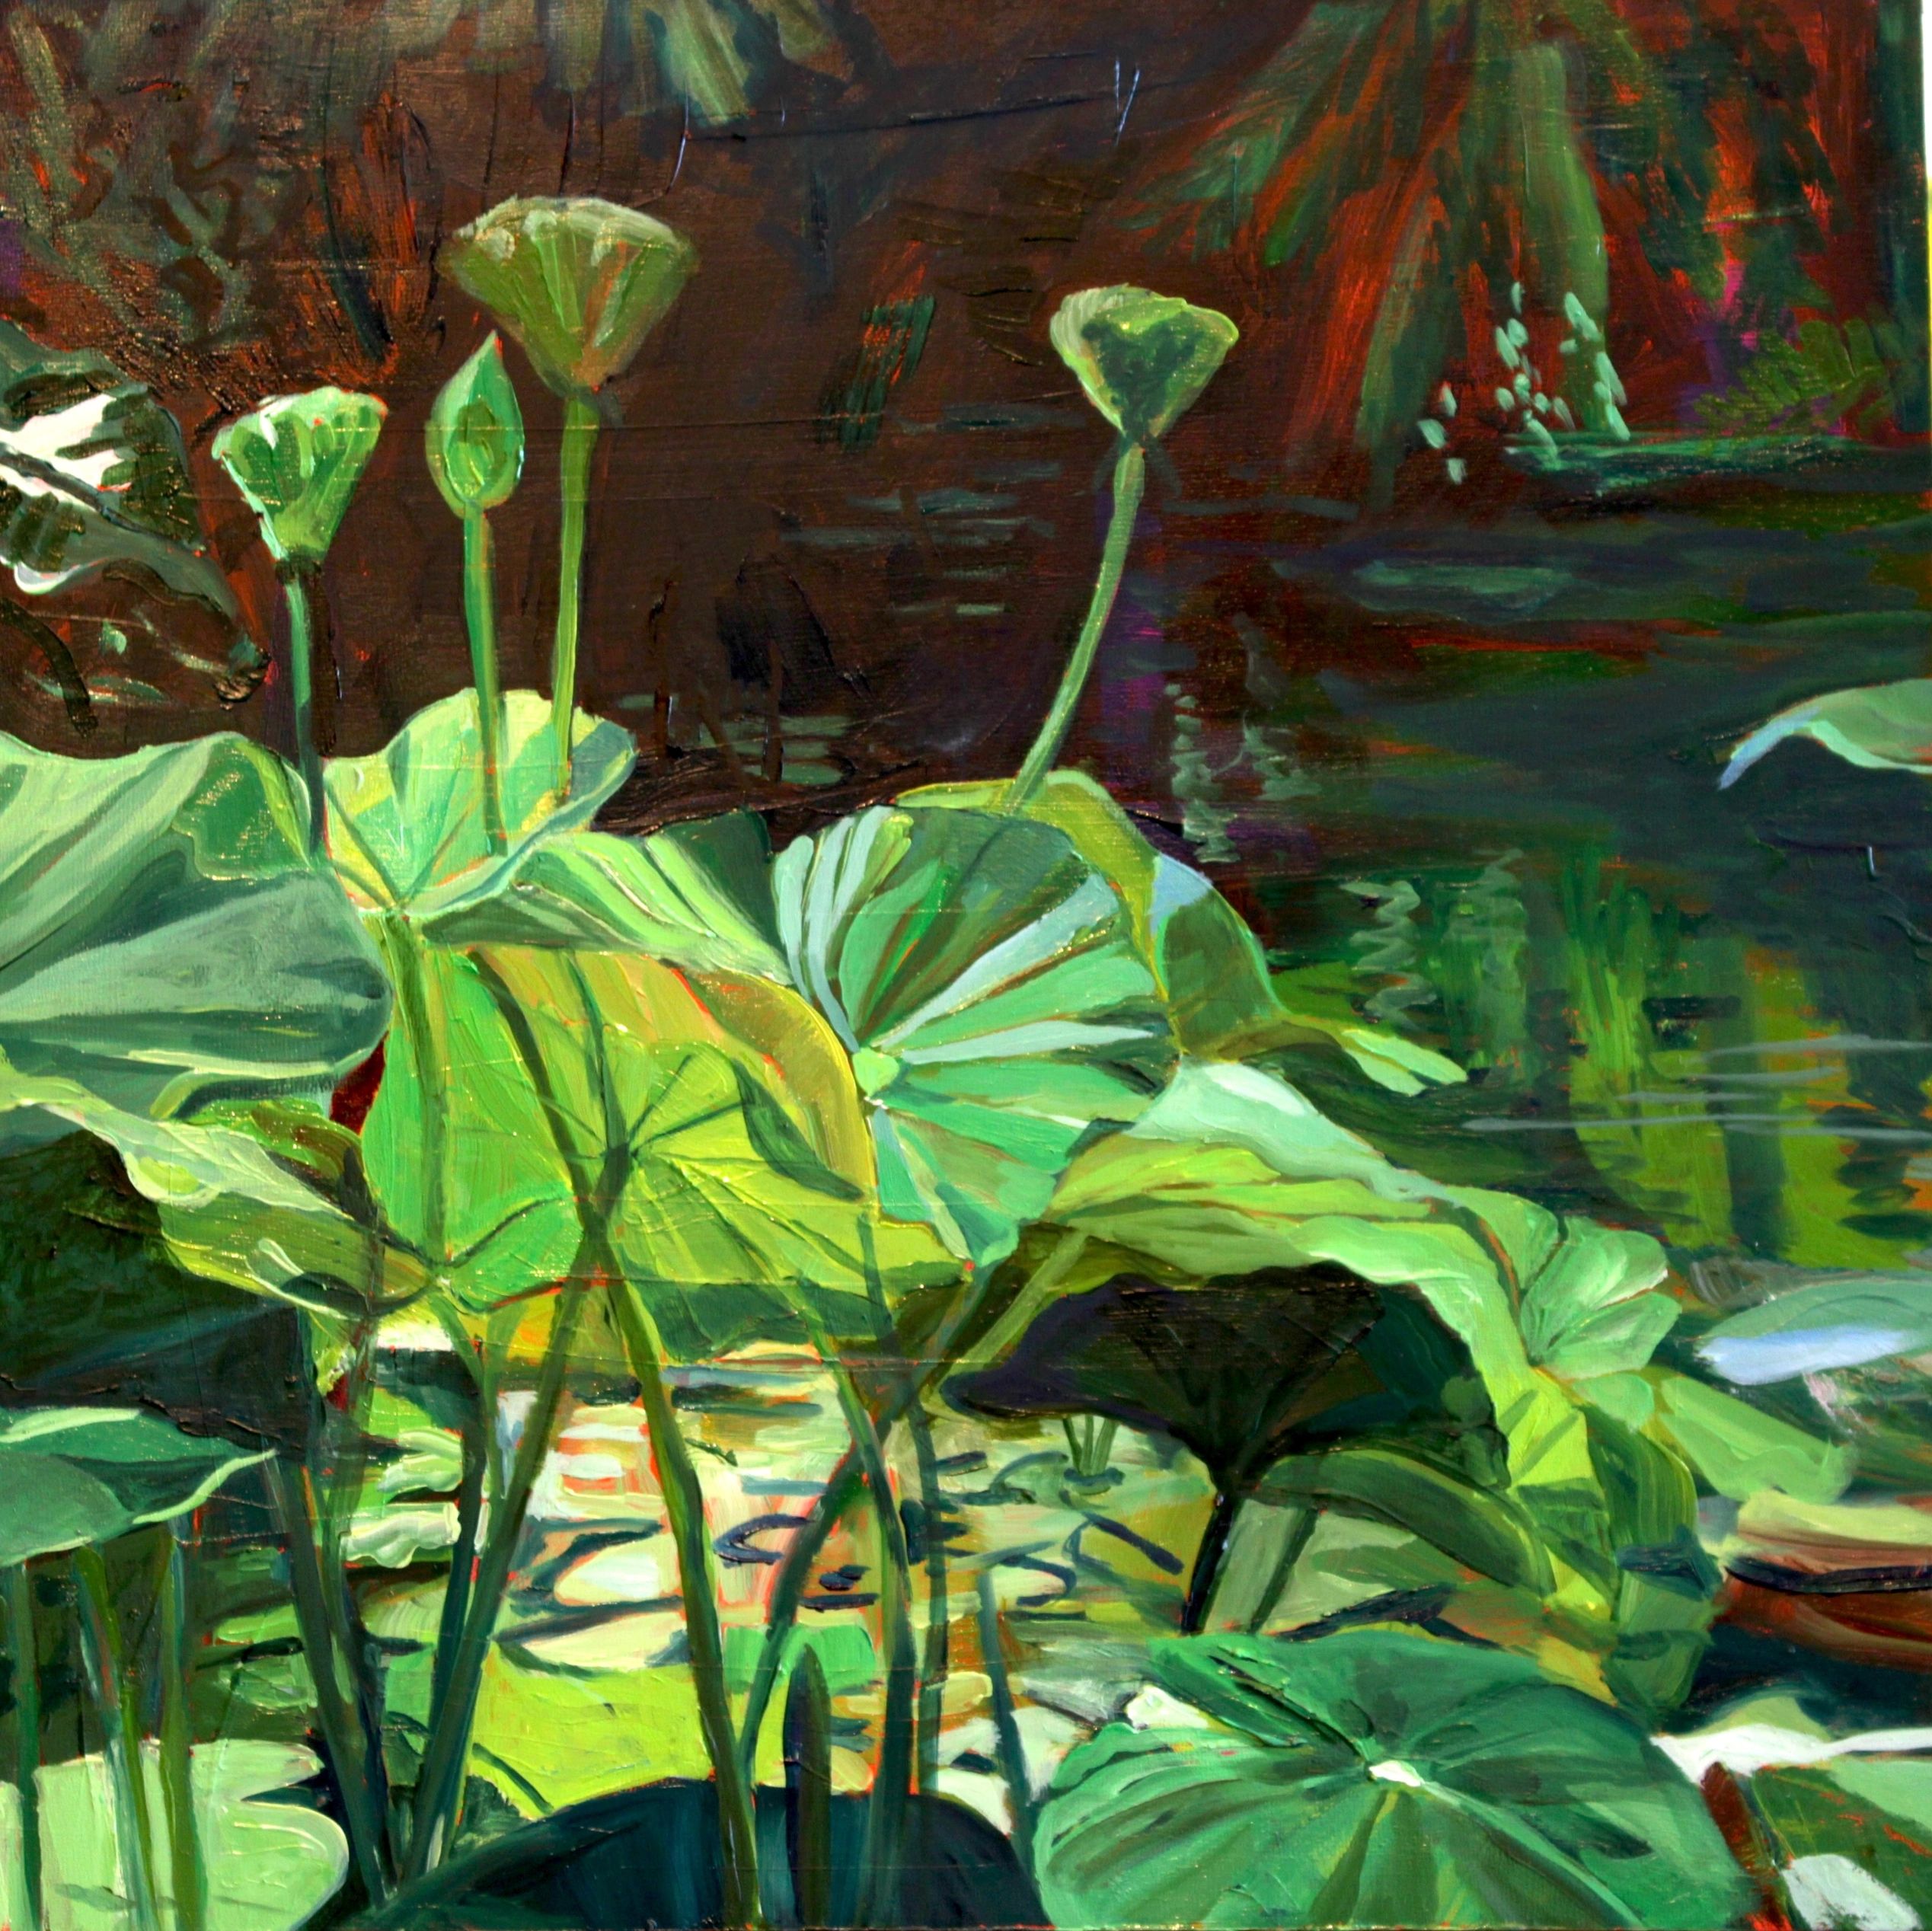 Painting of Lotus plants